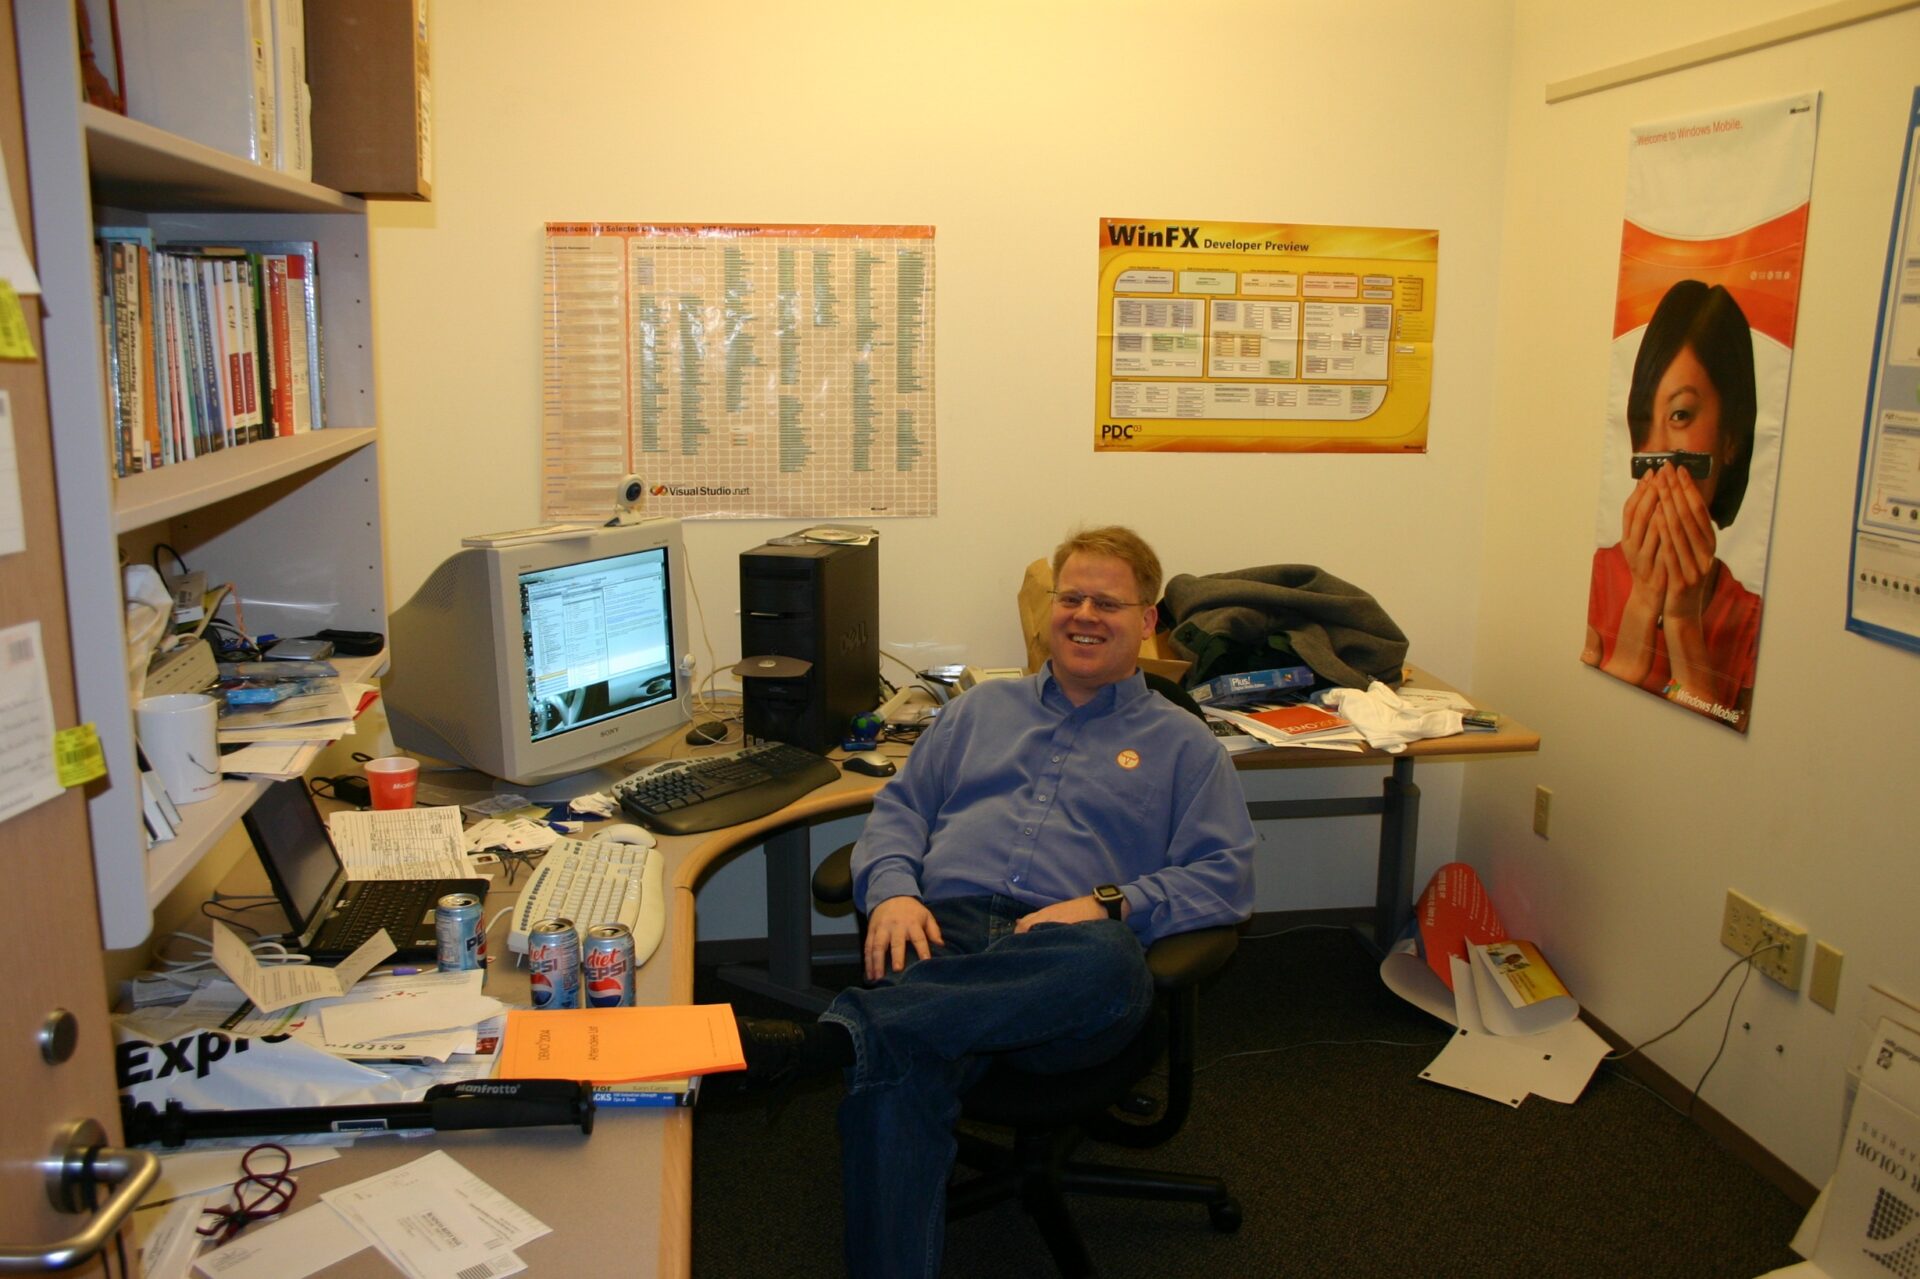 Robert Scoble Office at Microsoft